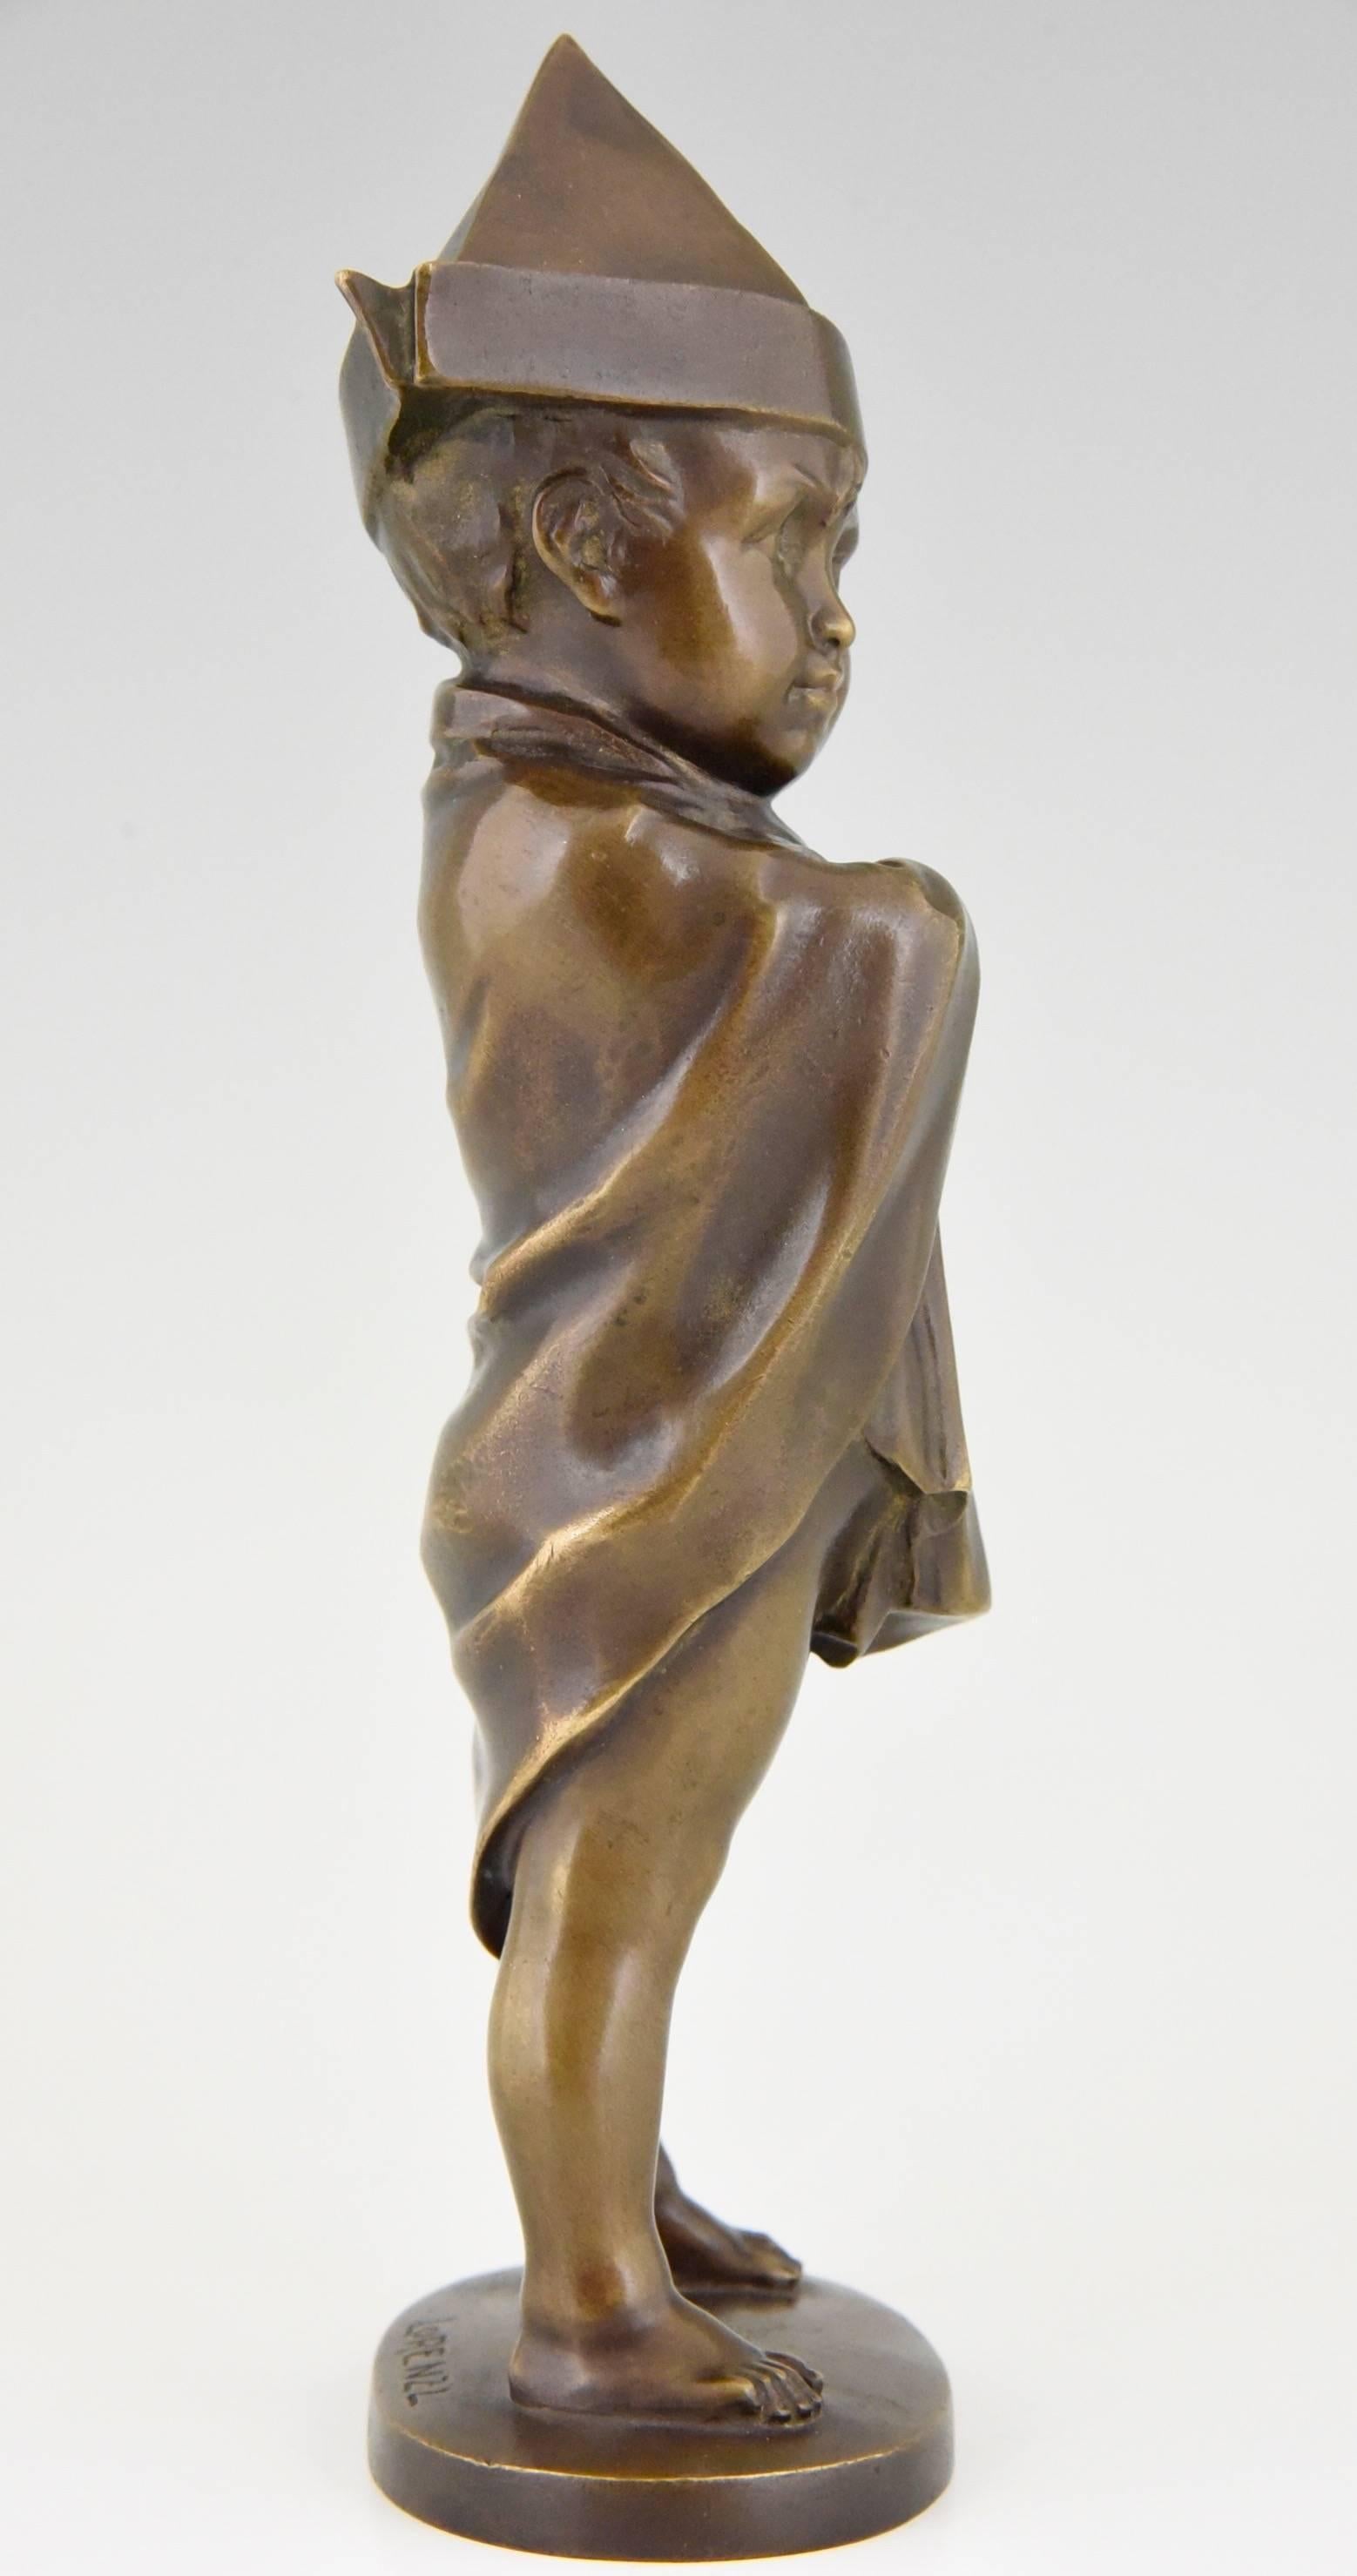 20th Century Art Deco Bronze Sculpture of a Boy dressed like Napoleon by Joseph Lorenzl 1930